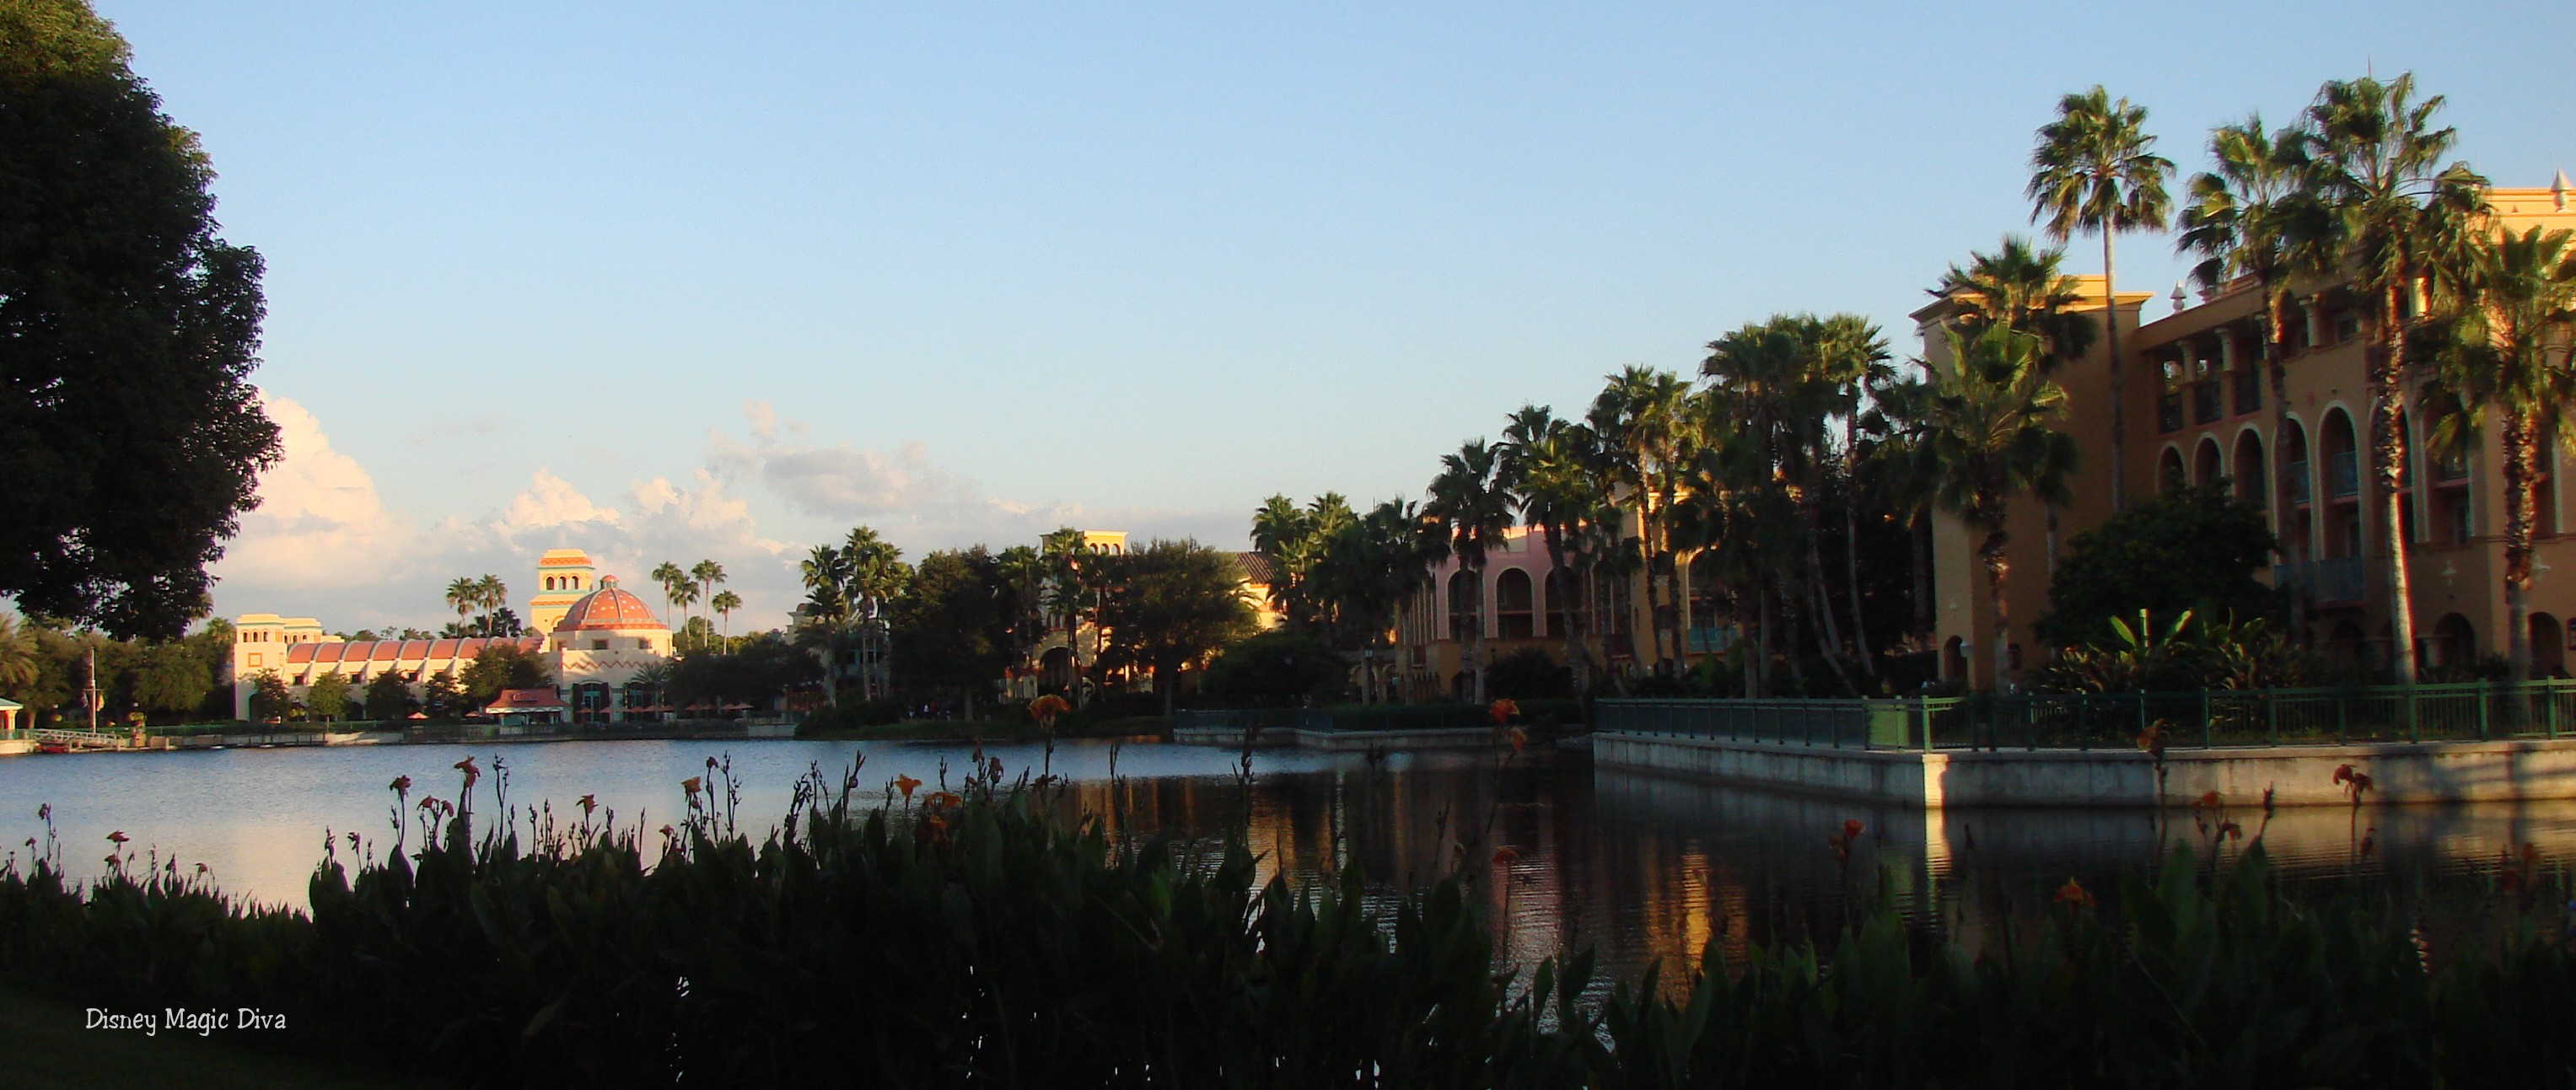 Why Should I Stay at a Walt Disney World Resort?